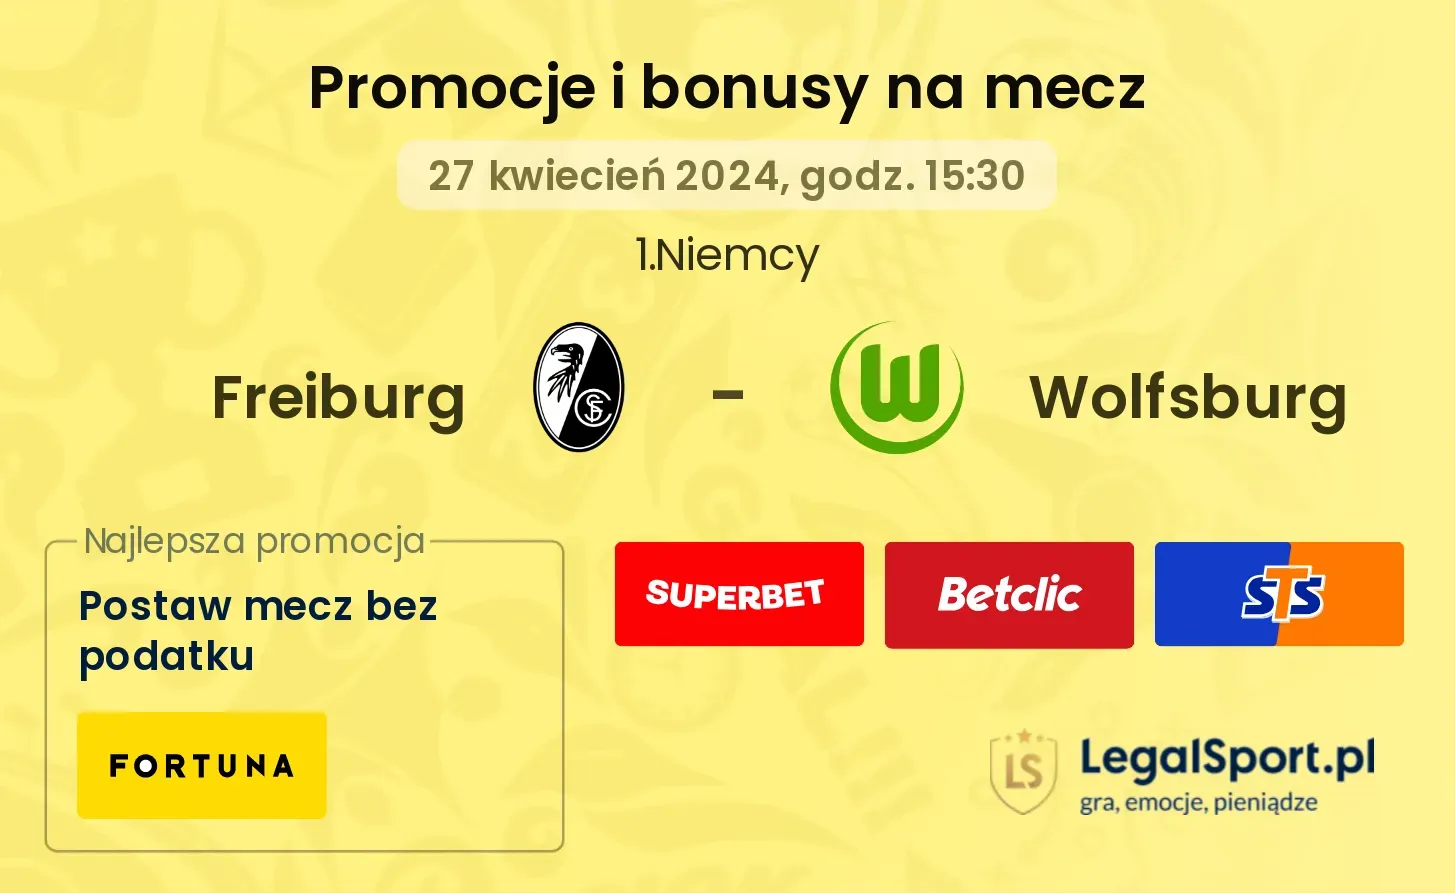 Freiburg - Wolfsburg promocje bonusy na mecz